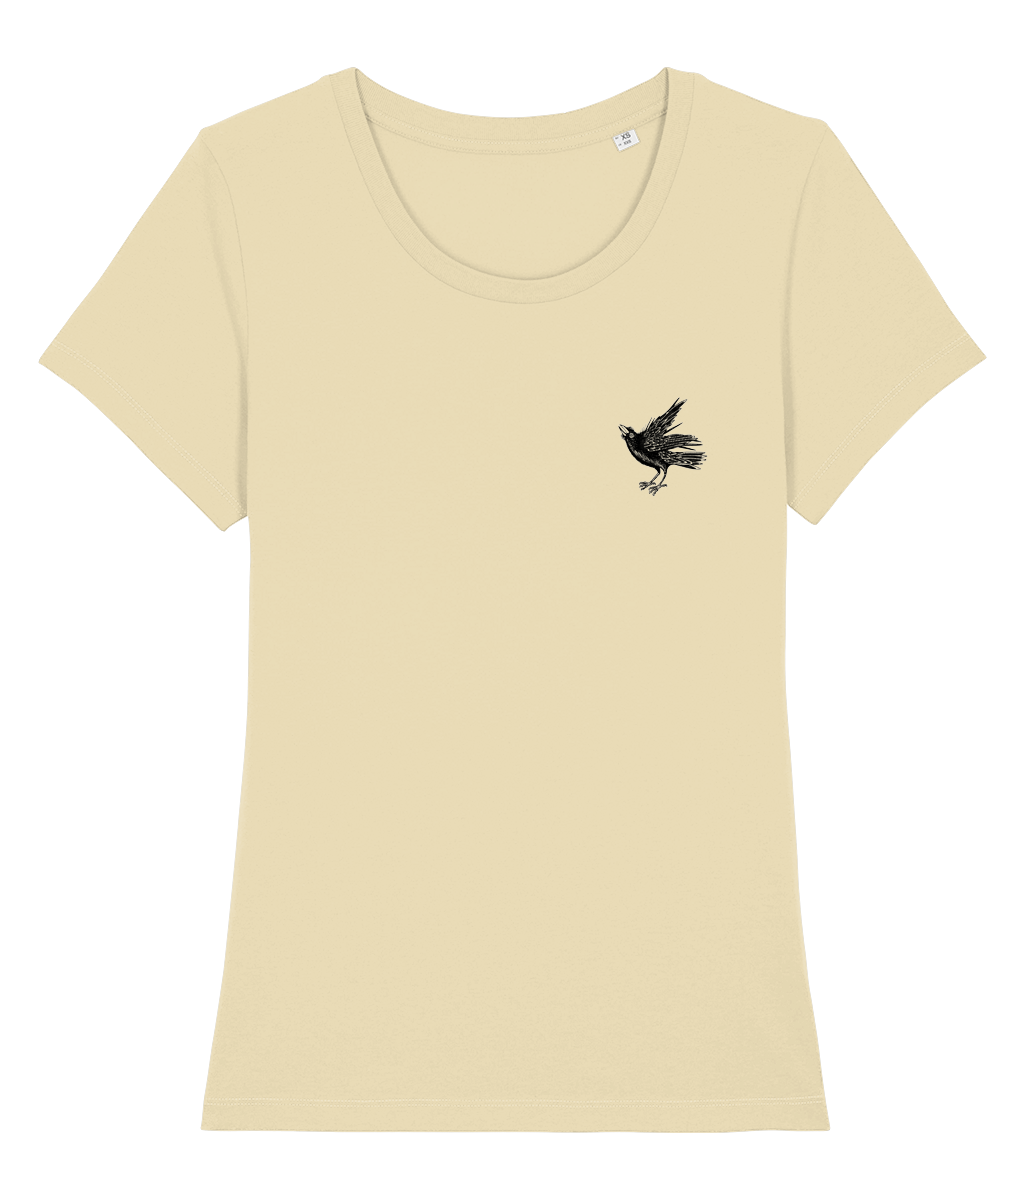 Women's Tshirt - Signature Black Crow